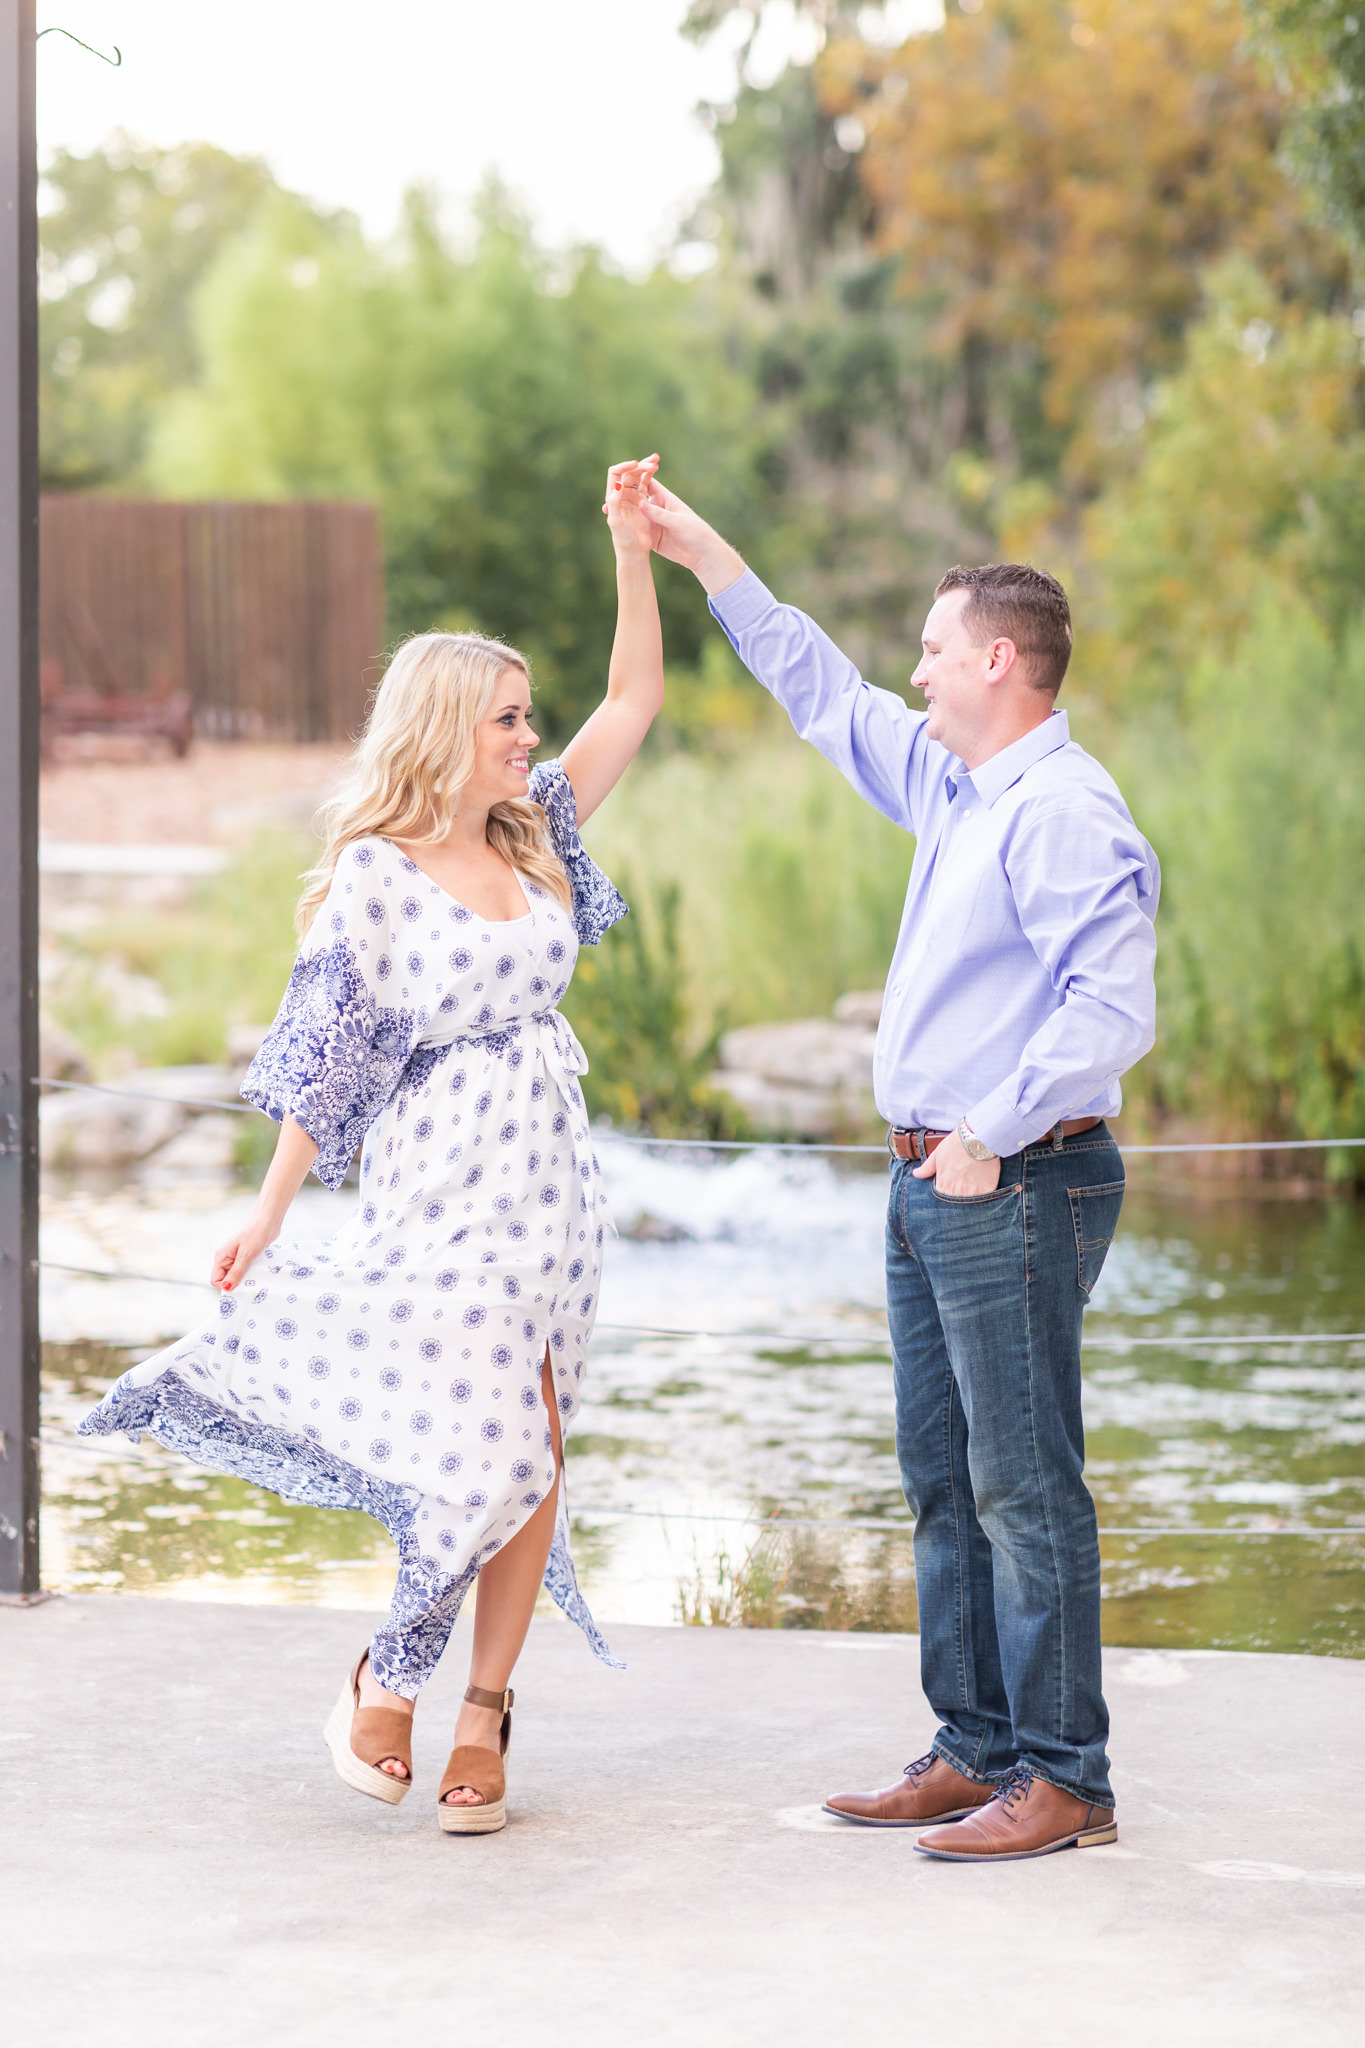 An Engagement Session at Hidden Falls - Remi's Ridge in Spring Branch, TX by Dawn Elizabeth Studios, San Antonio Wedding Photographer